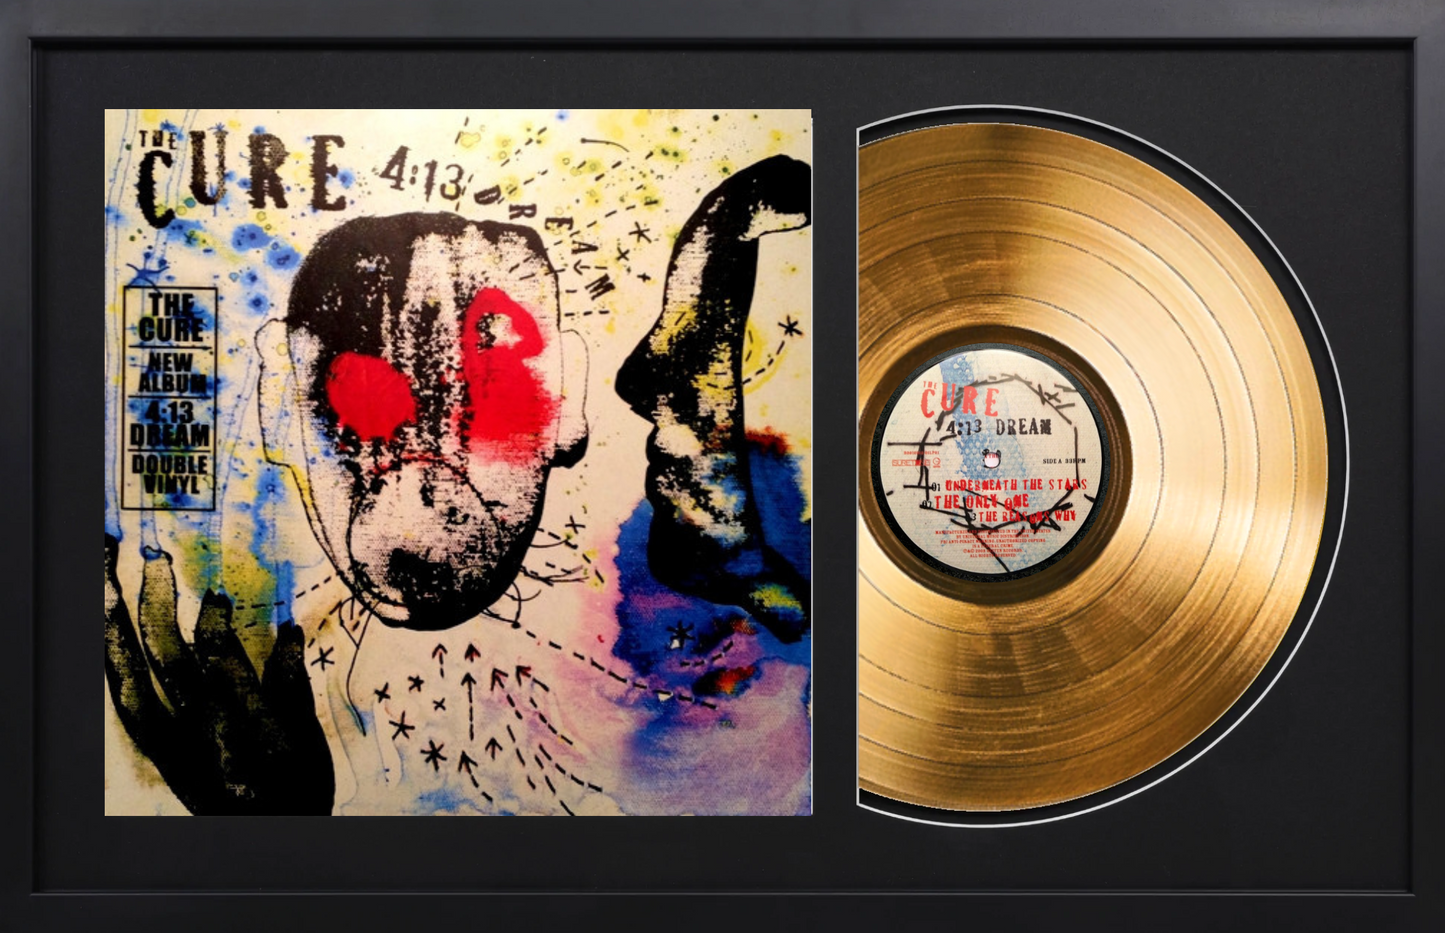 The Cure - 4:13 Dream - 14K Gold Framed Album